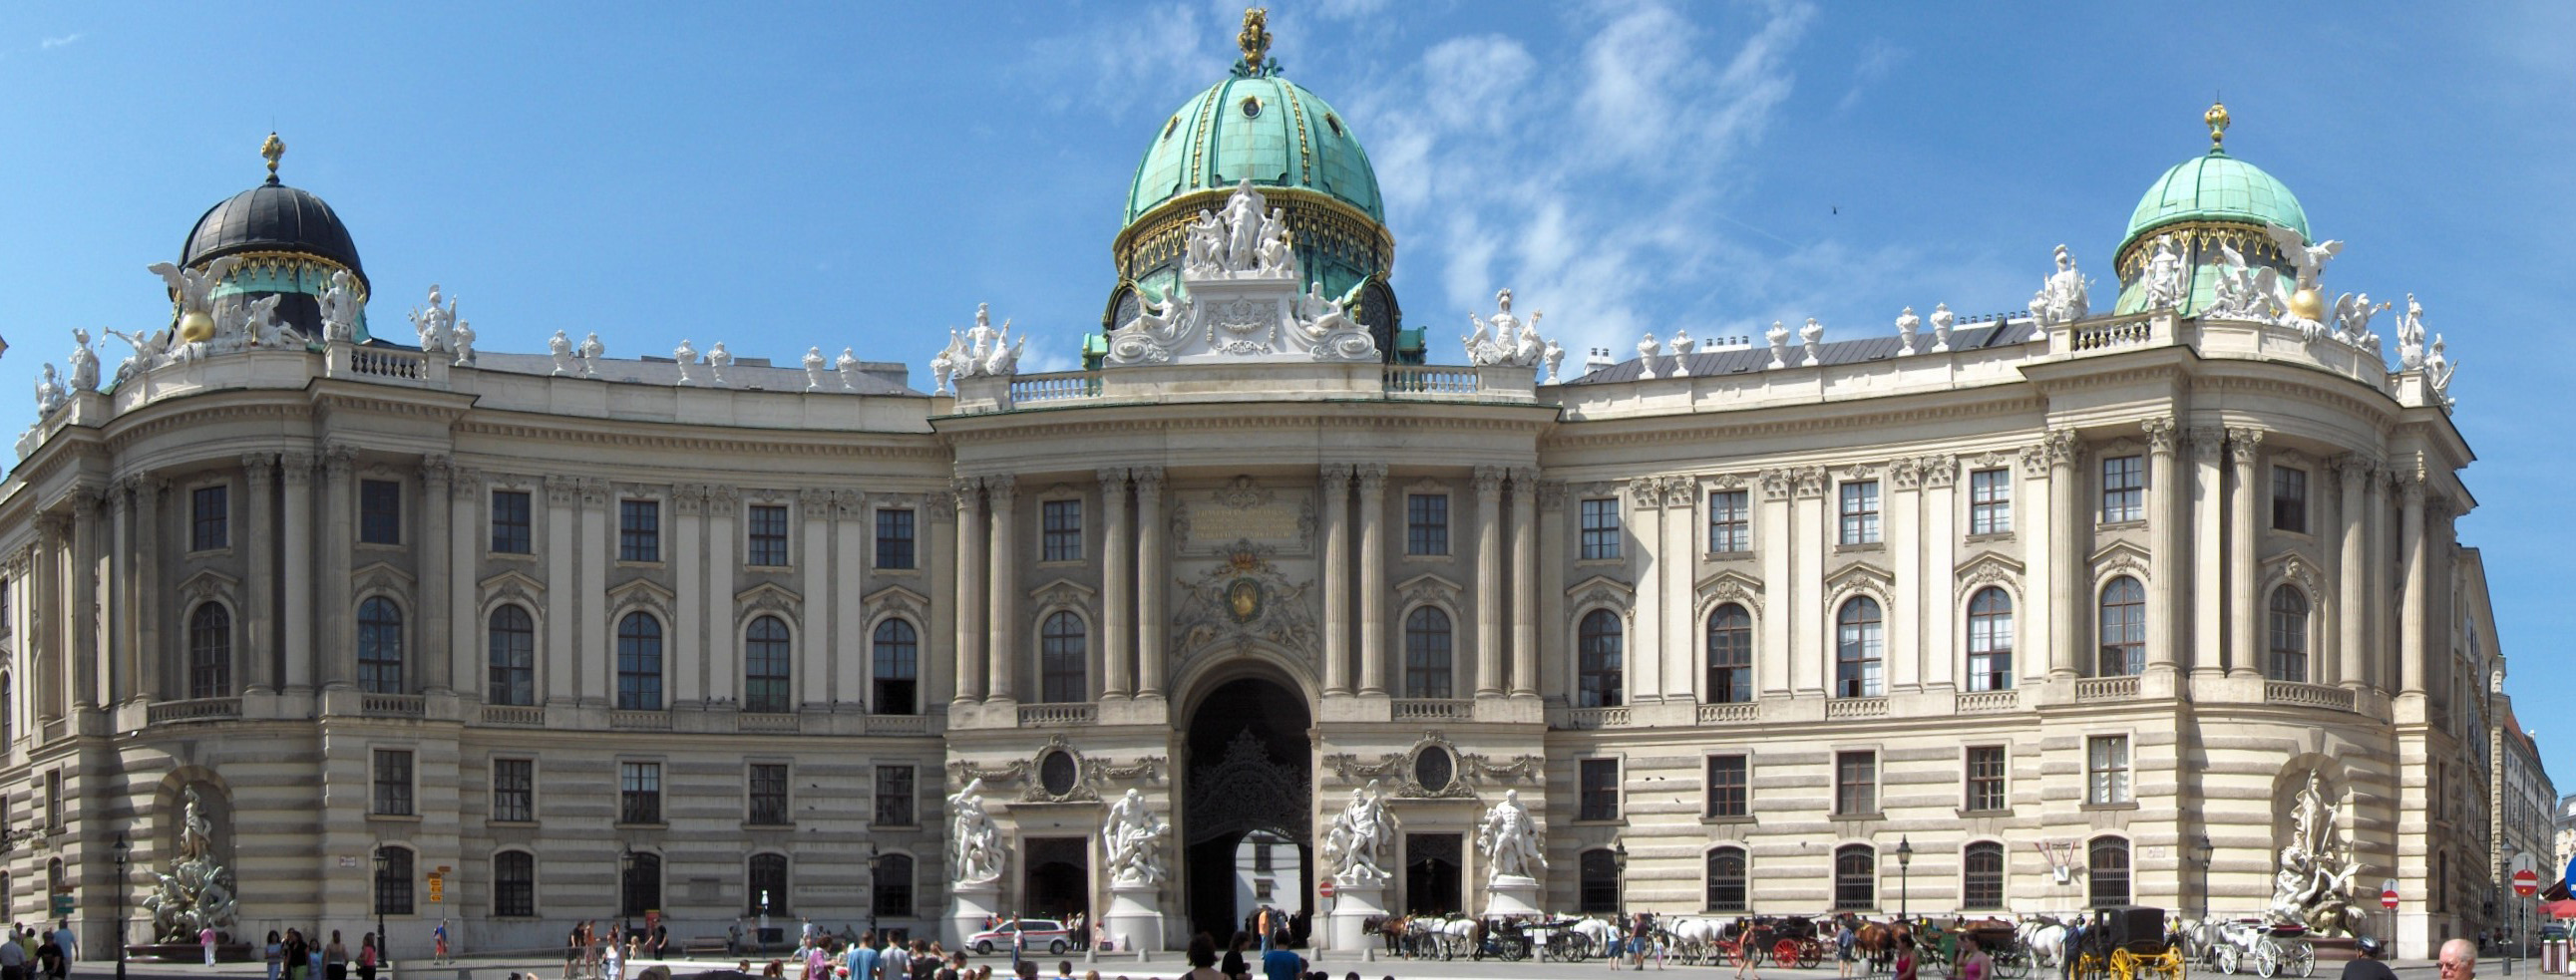 Amazing Hofburg Palace Pictures & Backgrounds